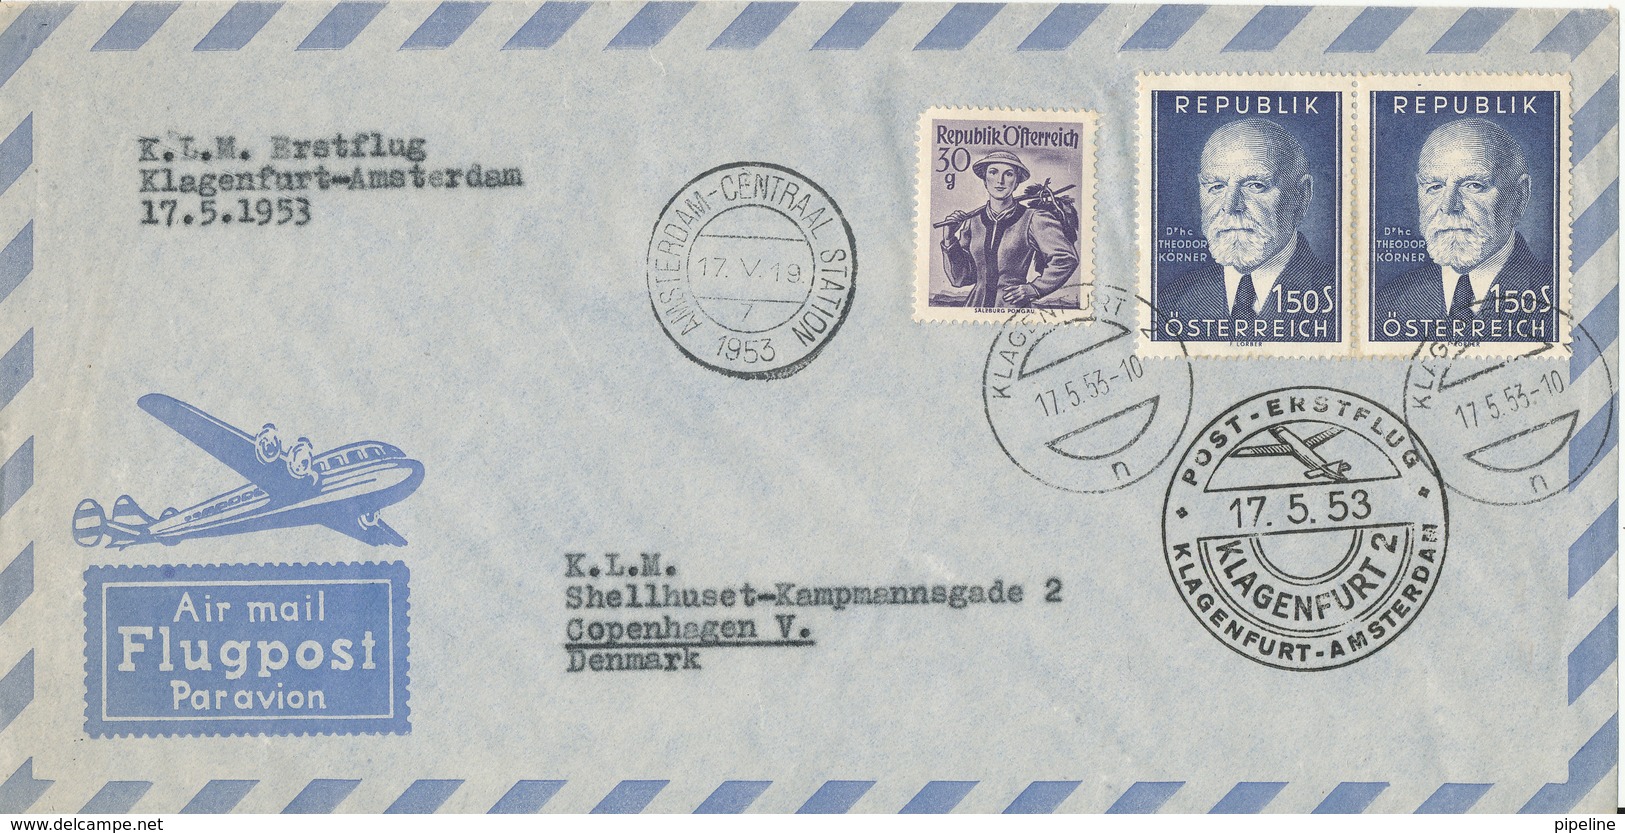 Austria First Flight KLM Klagenfurt - Amsterdam 17-5-1953 Air Mail Cover Sent To Denmark - First Flight Covers